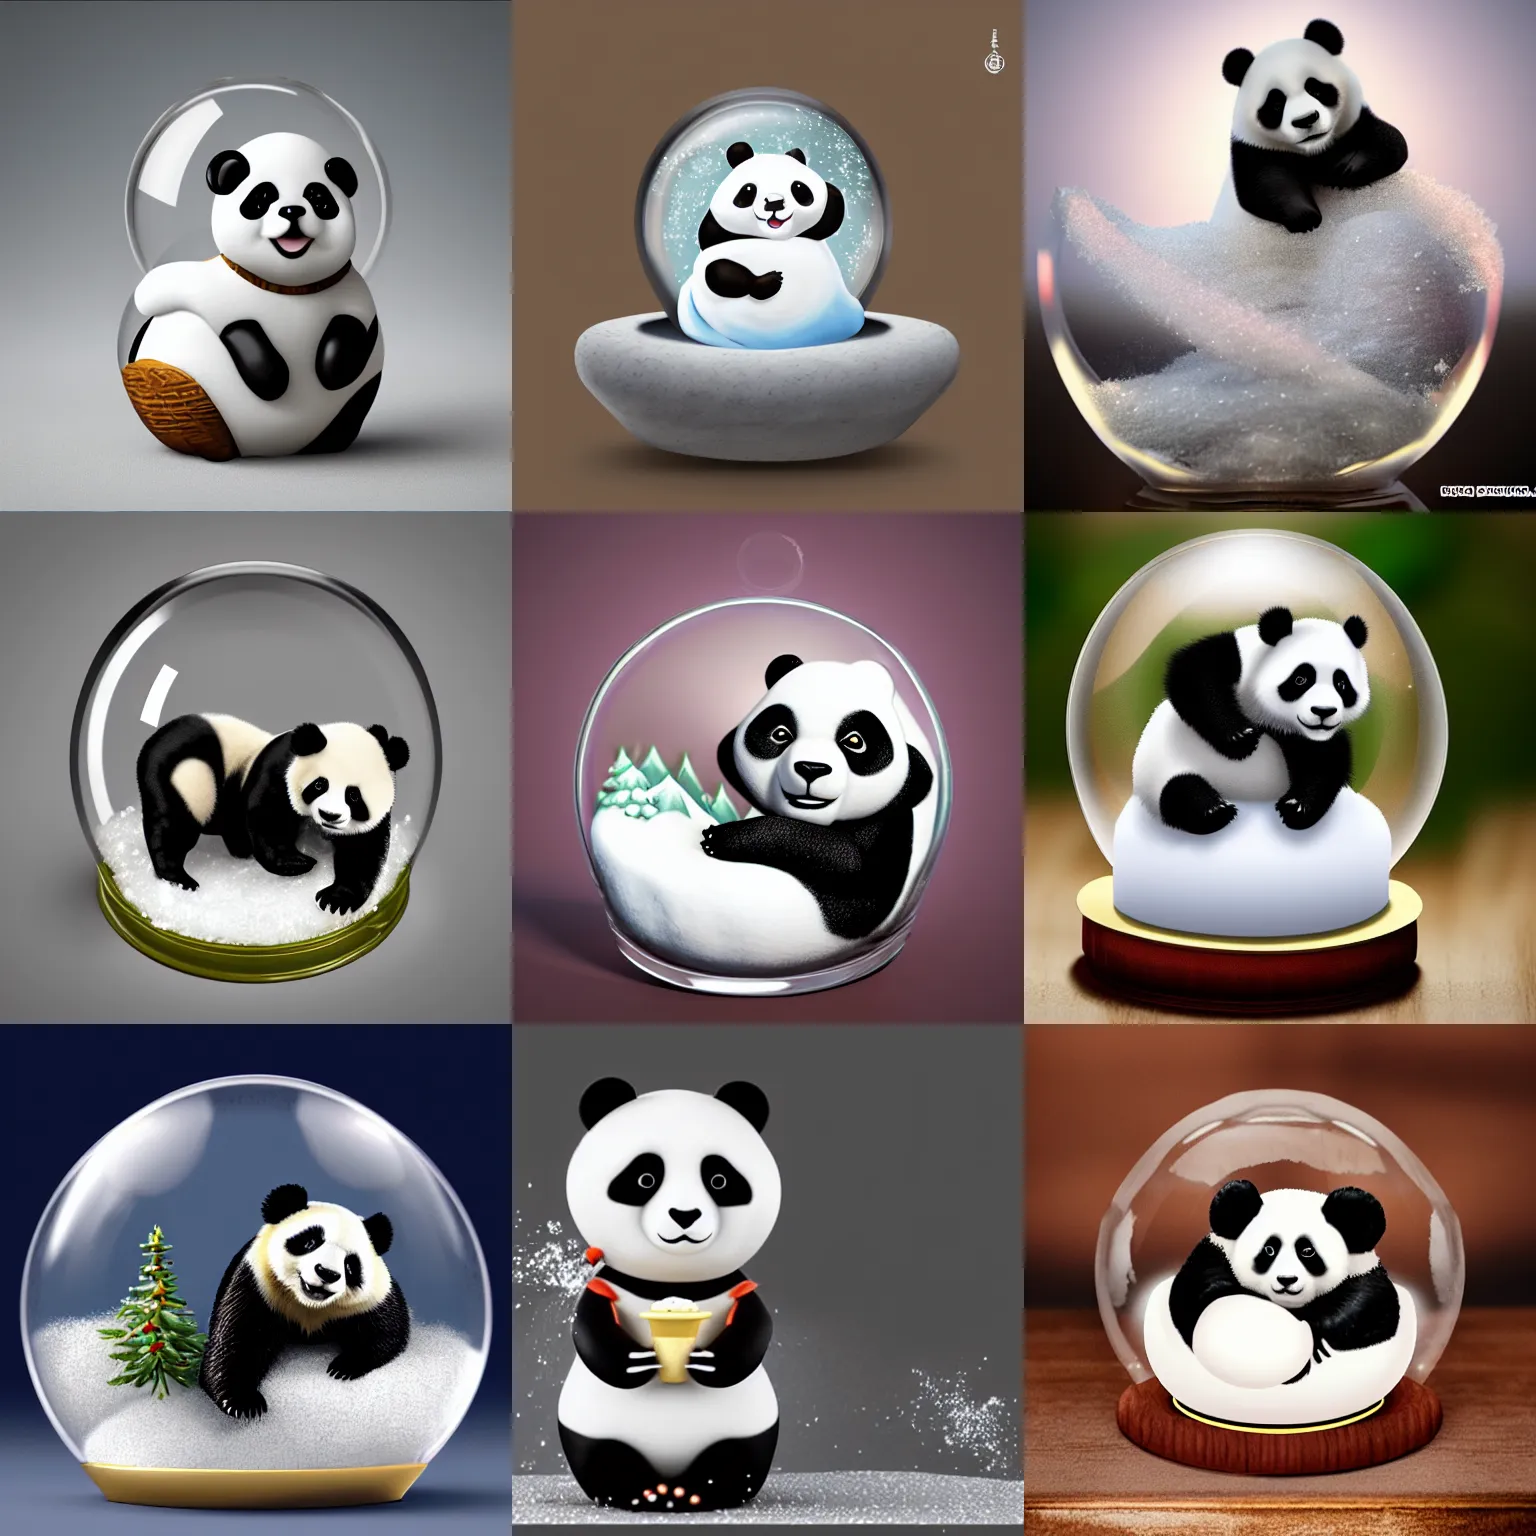 Prompt: panda snow globe, cute, adorable, photorealistic, octane render